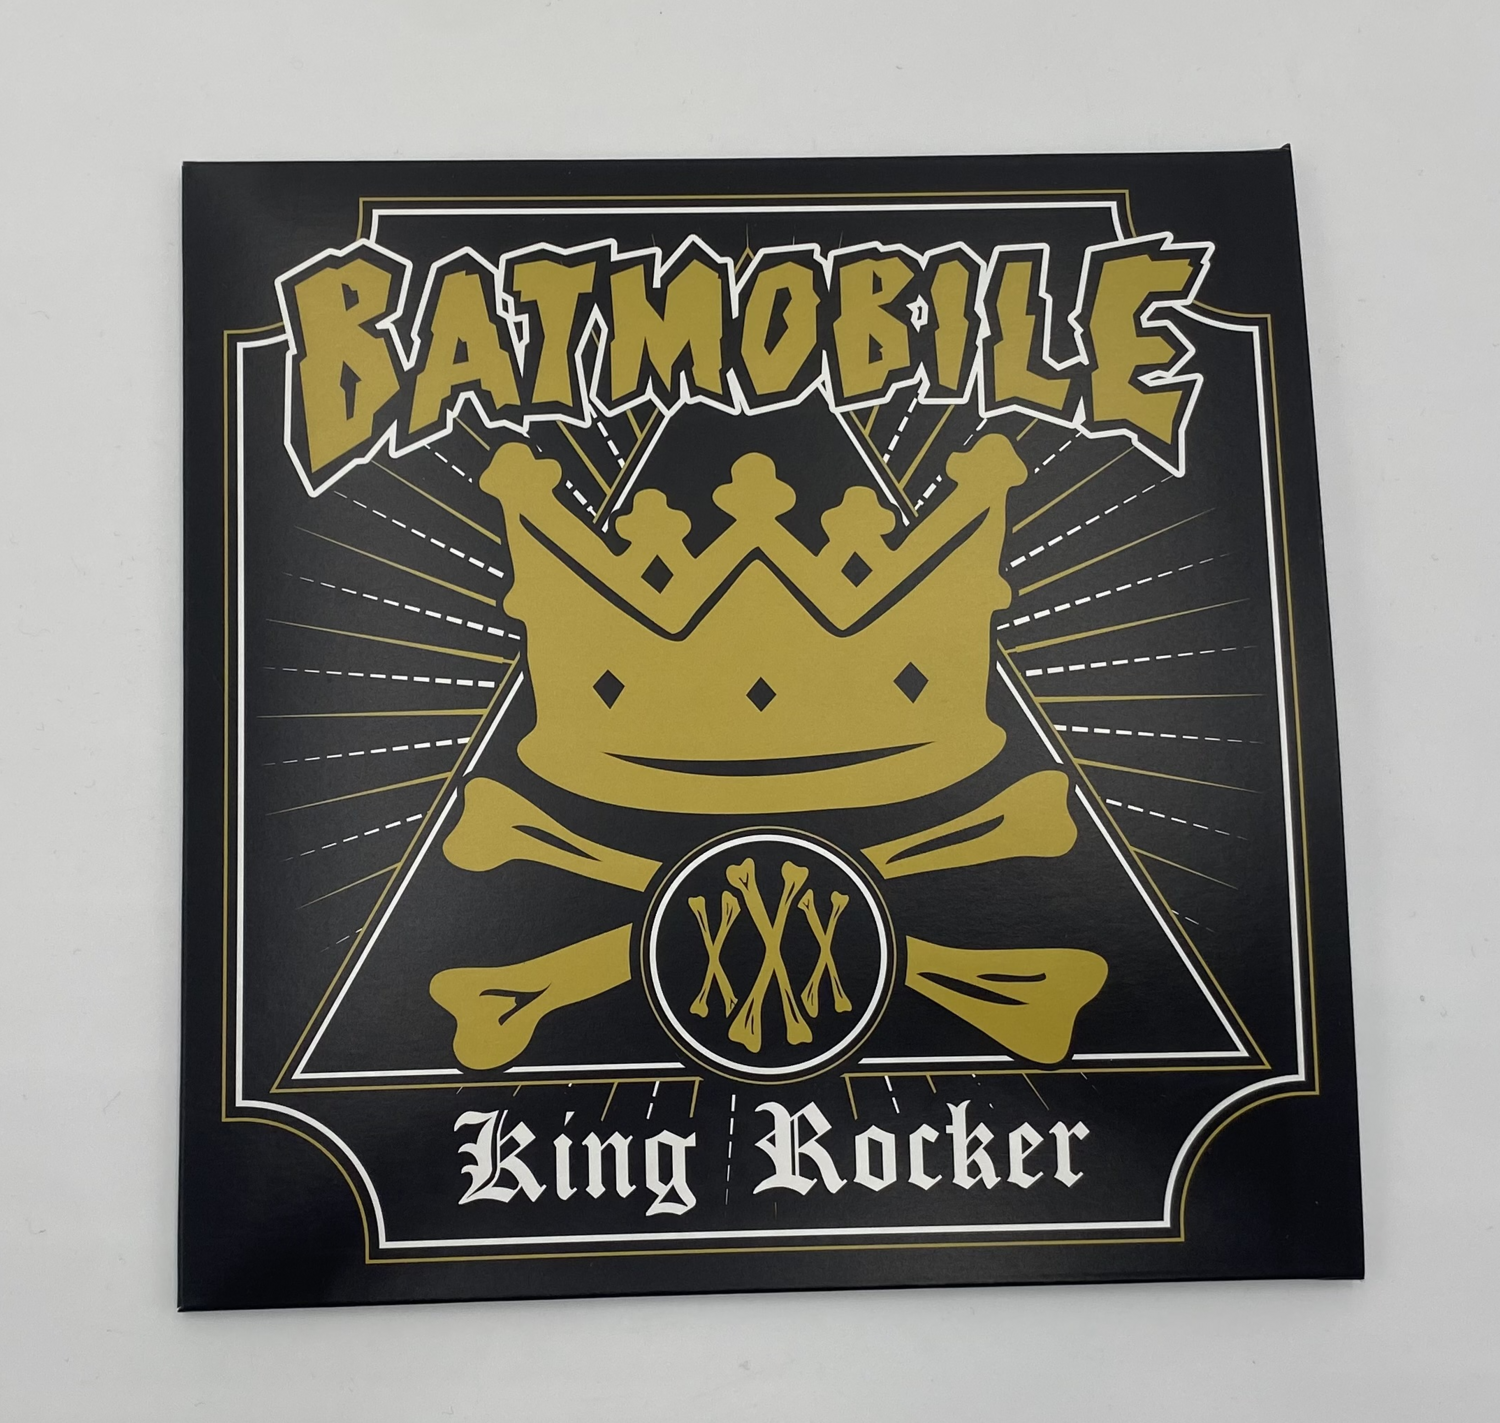 BATMOBILE "King Rocker" EP 2021